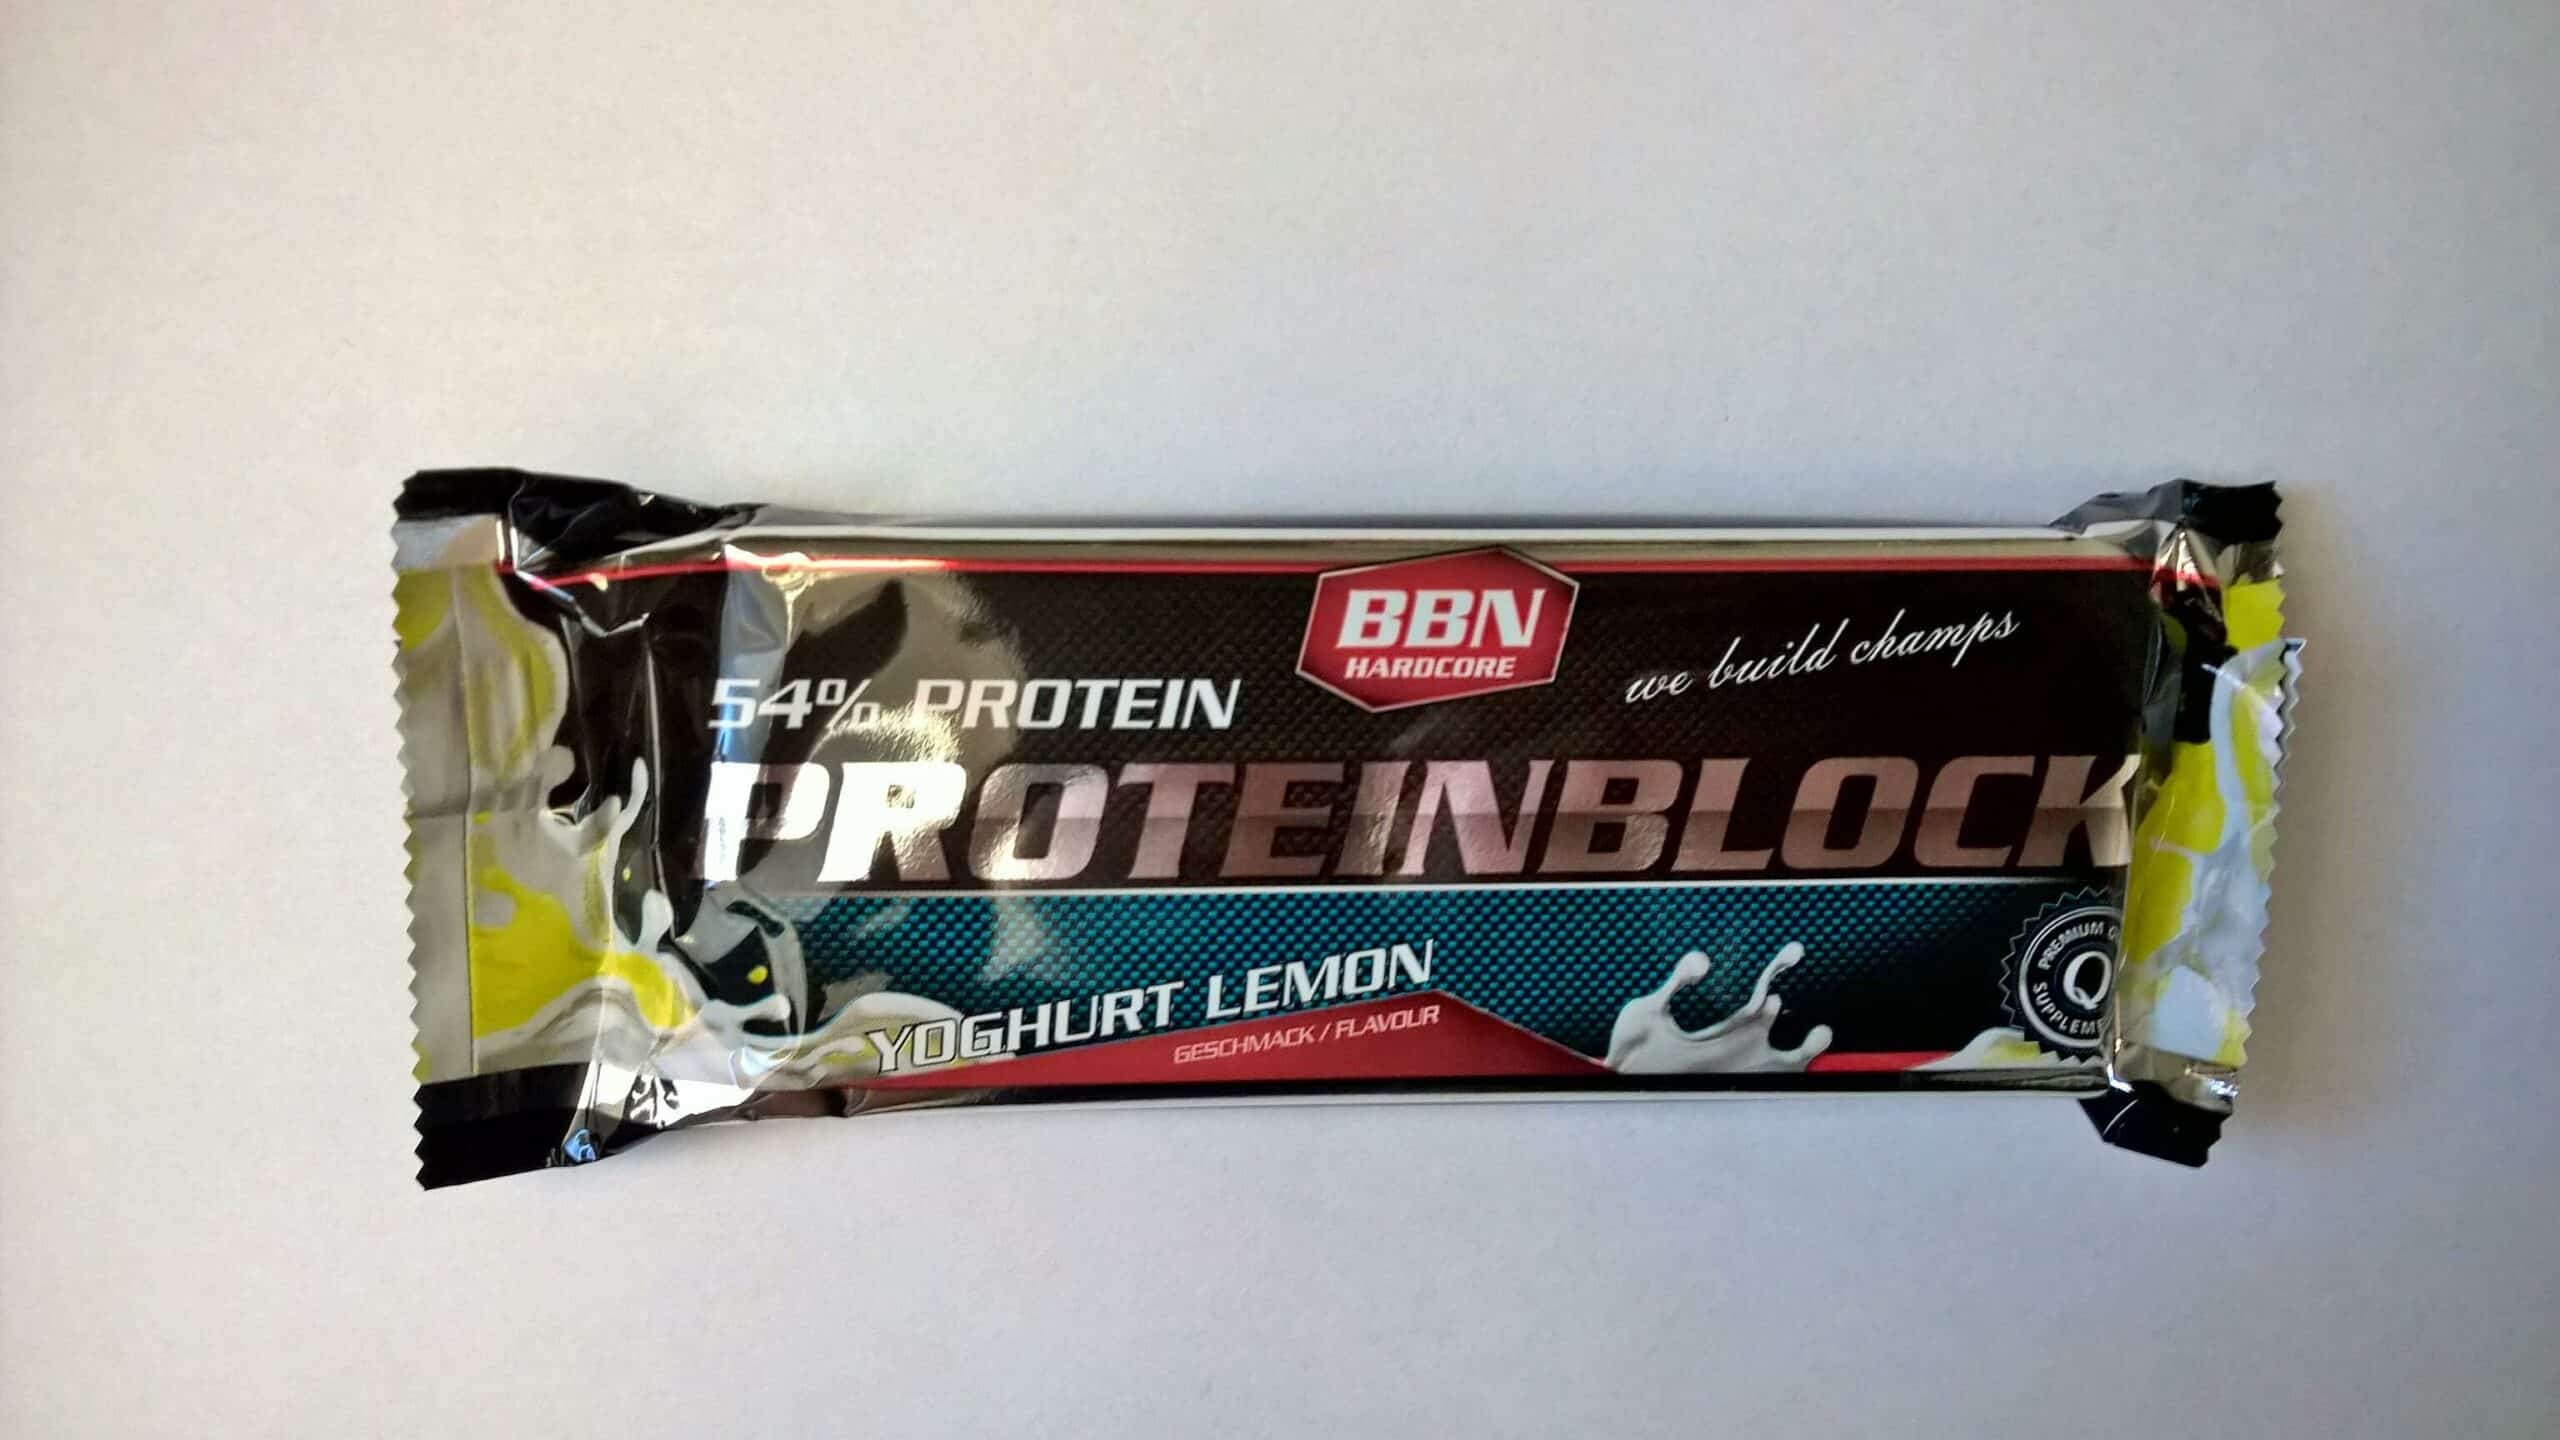 Best Body Nutrition Protein Block Yoghurt Lemon